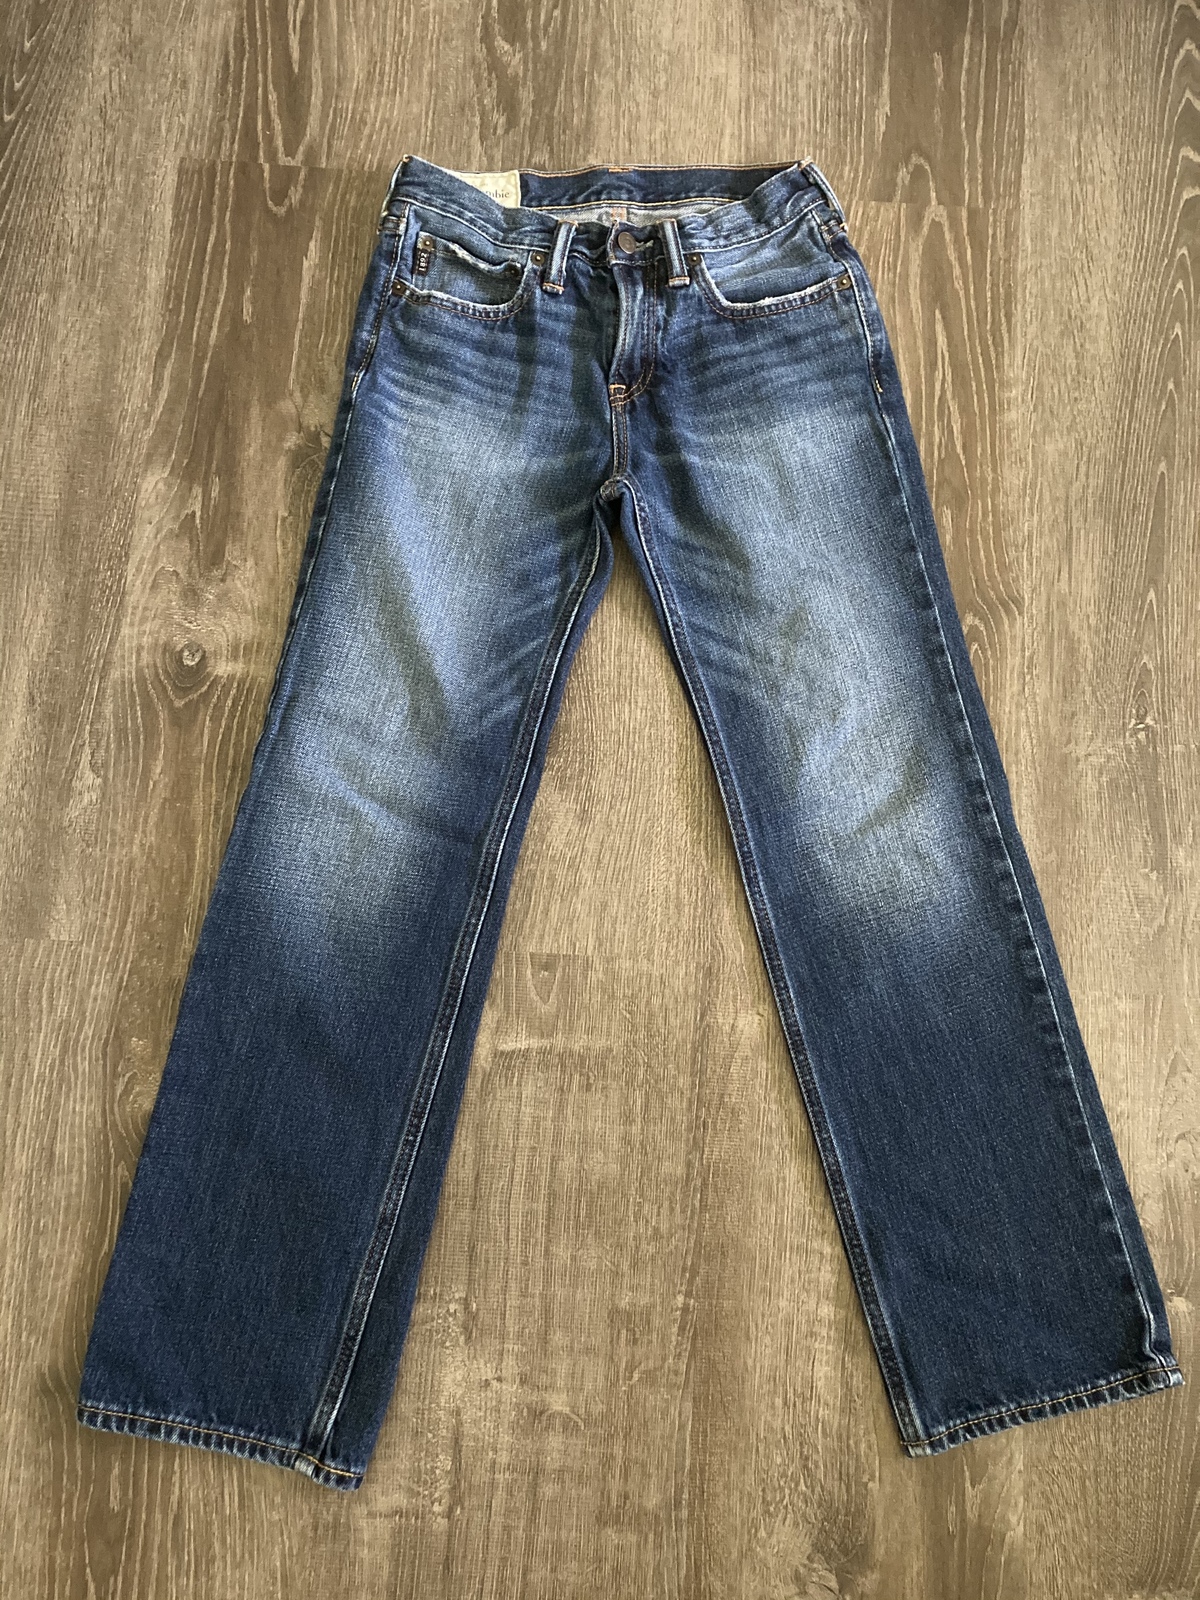 Abercrombie Kids Size 14 Jeans - $15.99